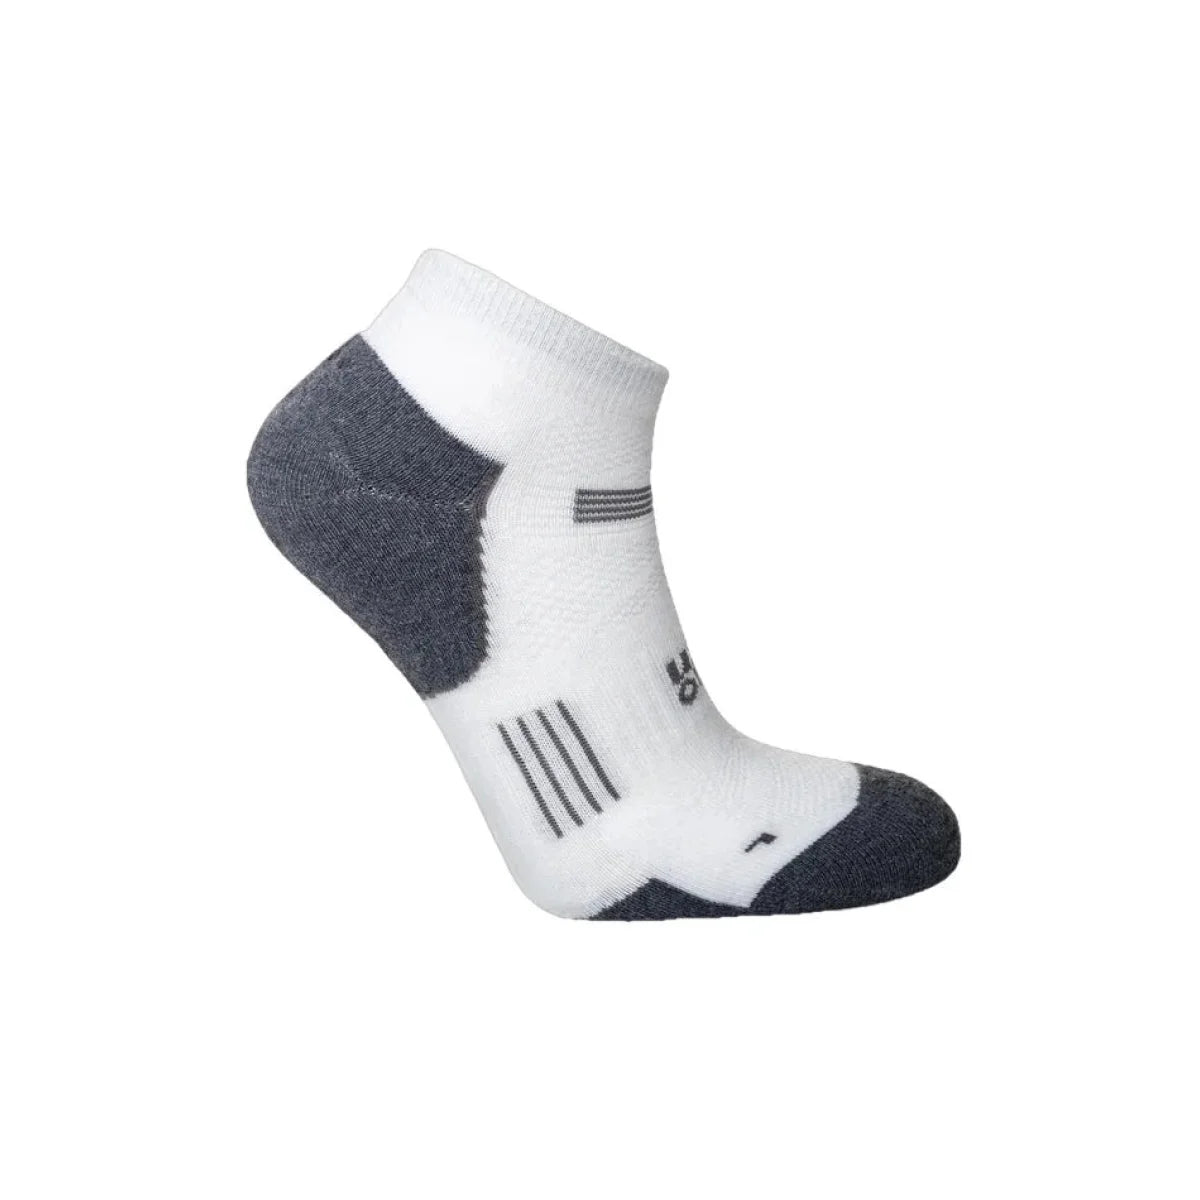 Unisex Hilly Supreme Quarter Socks